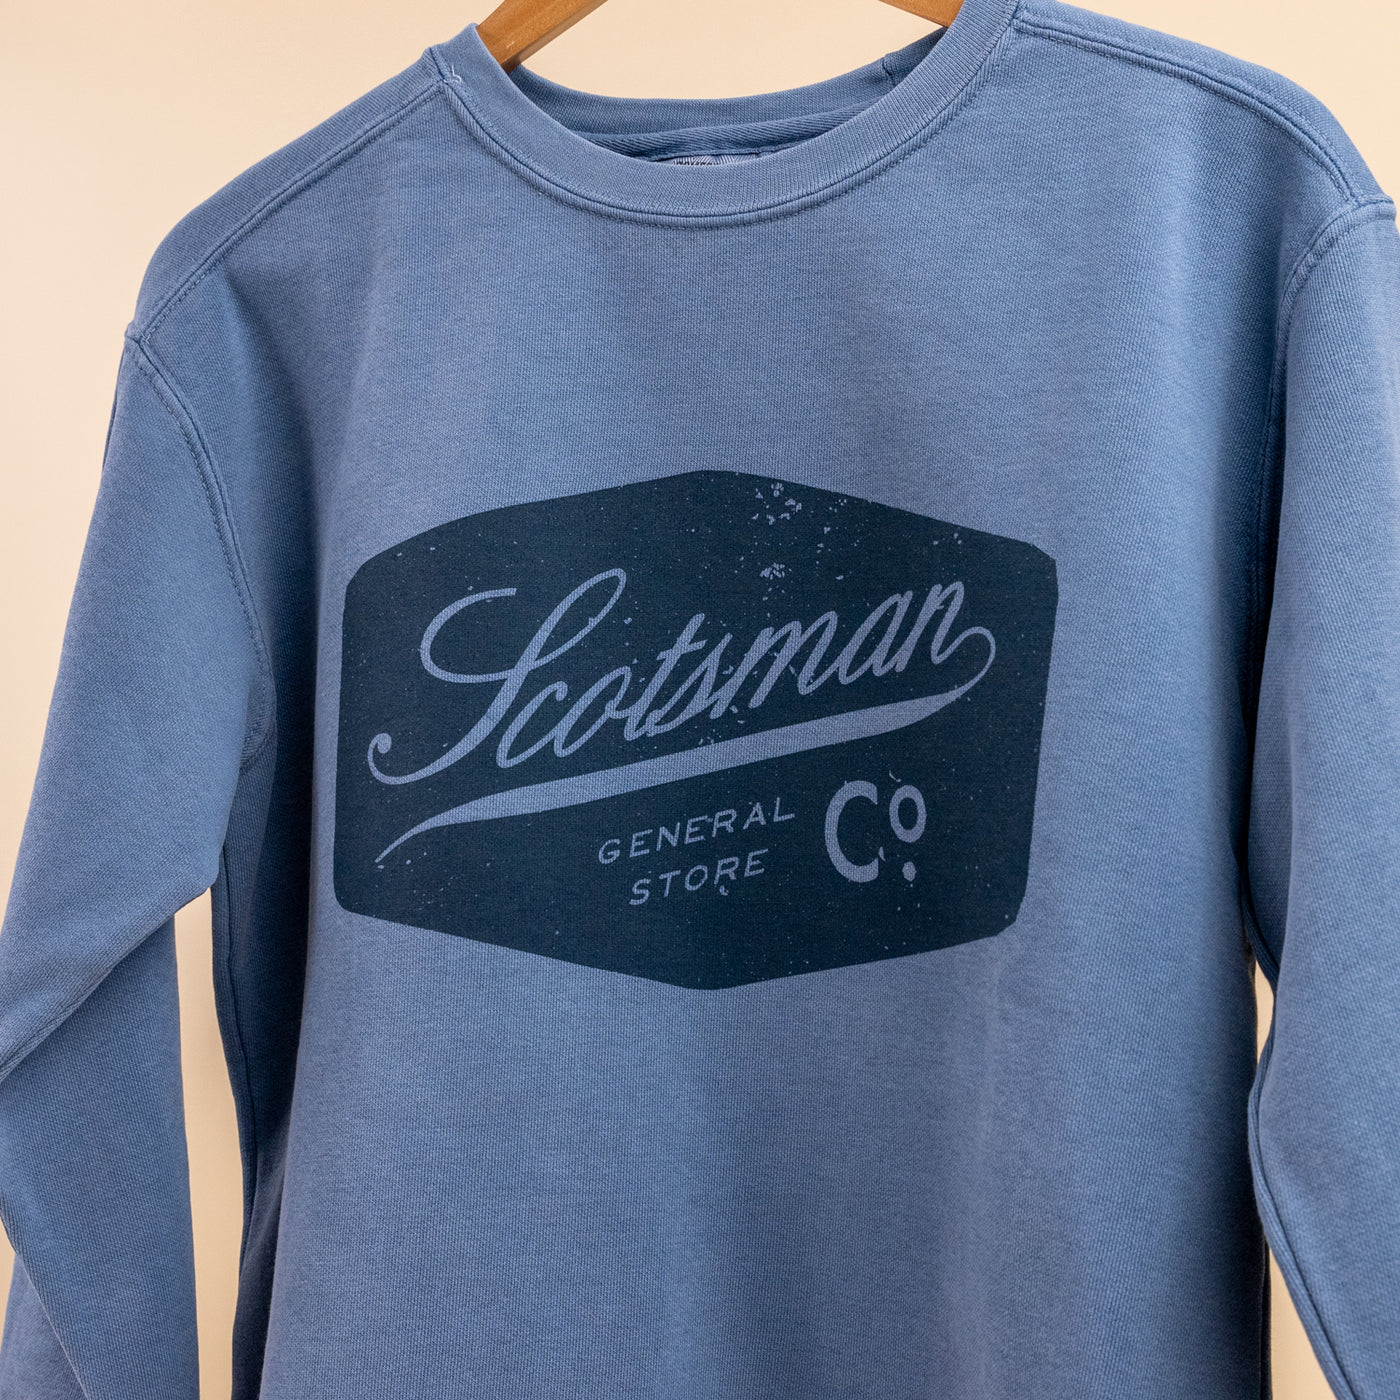 Scotsman General Store Sweatshirt